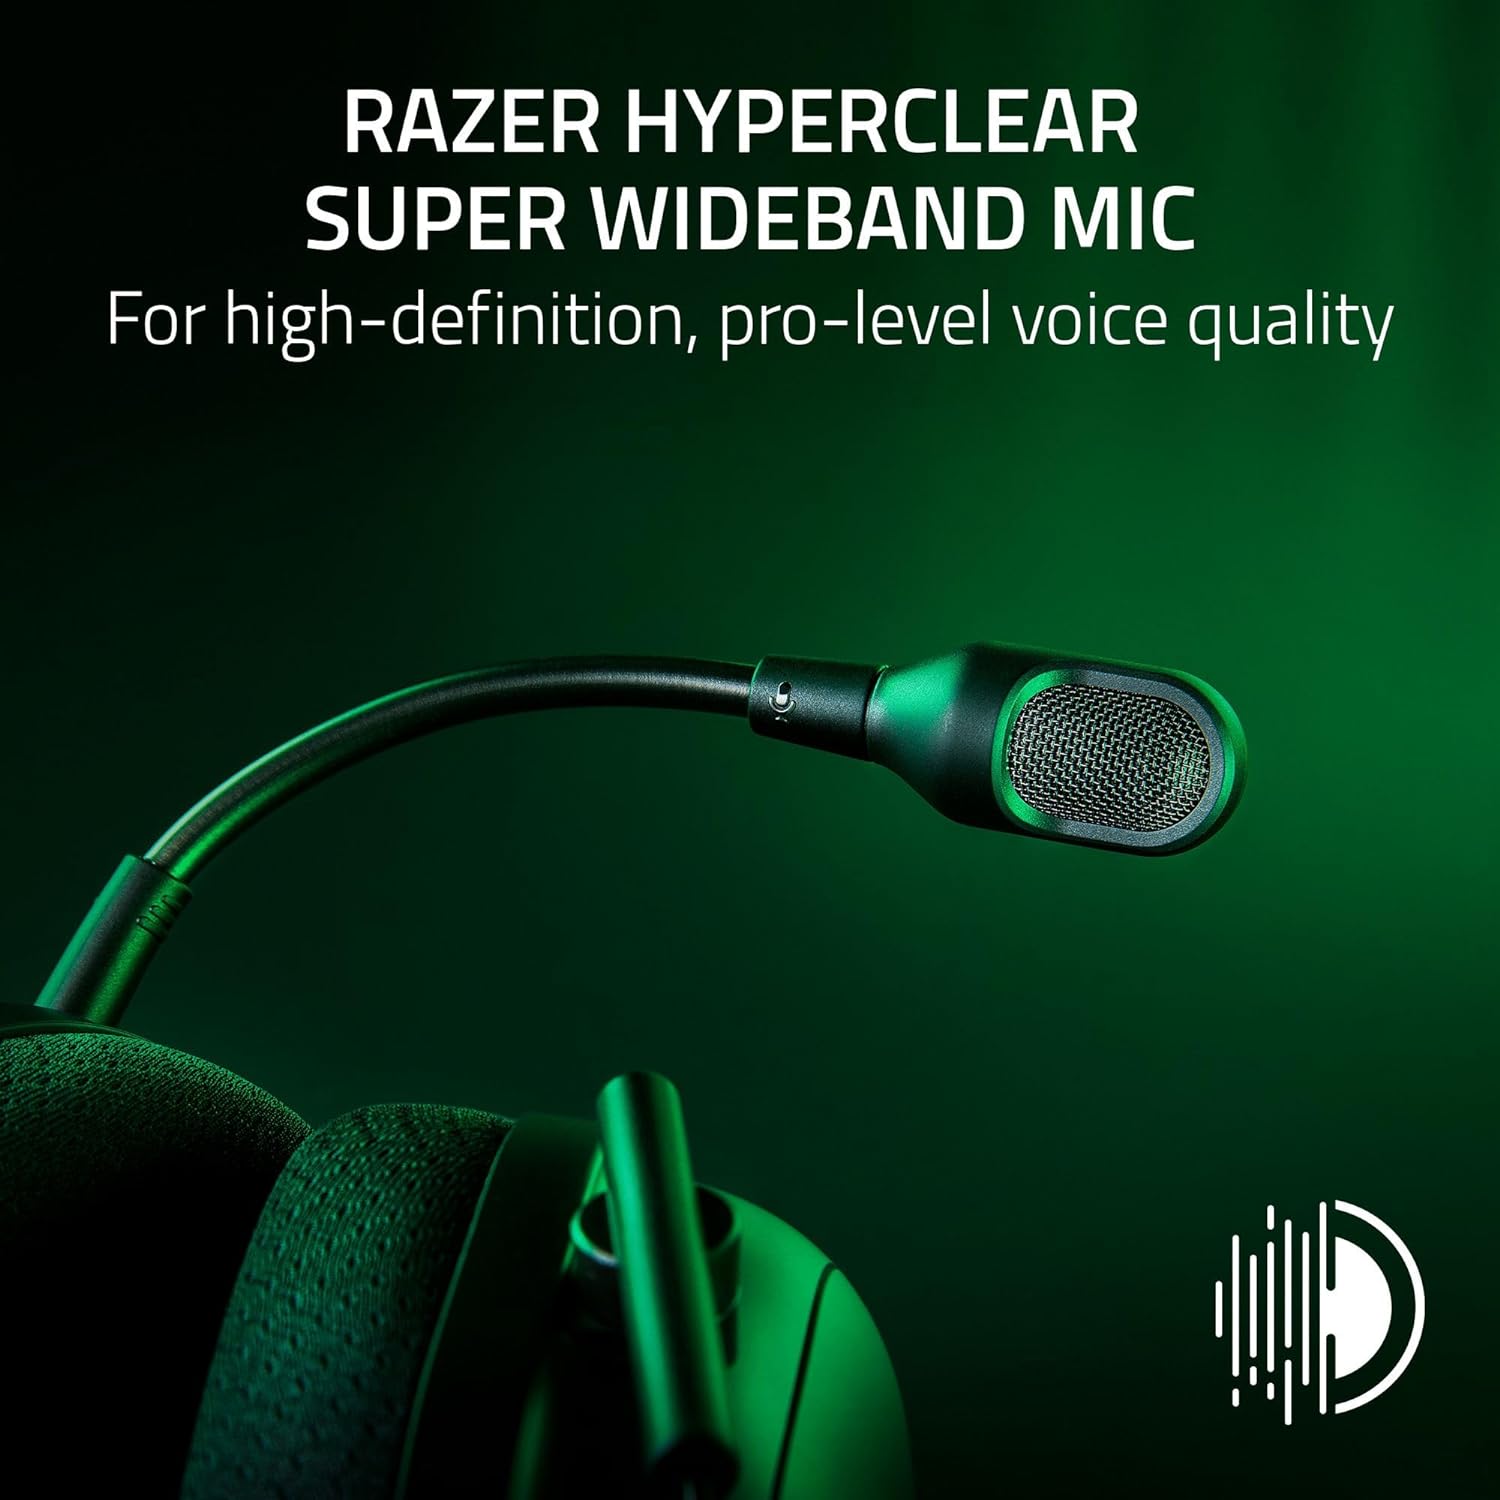 Razer Blackshark V2 Pro (Xbox) - Draadloze Console E-Sports Headset voor Xbox S|X & One (Triforce 50mm Membranen, HyperSpeed Draadloos 2,4 GHz, afneembare HyperClear microfoon) Zwart